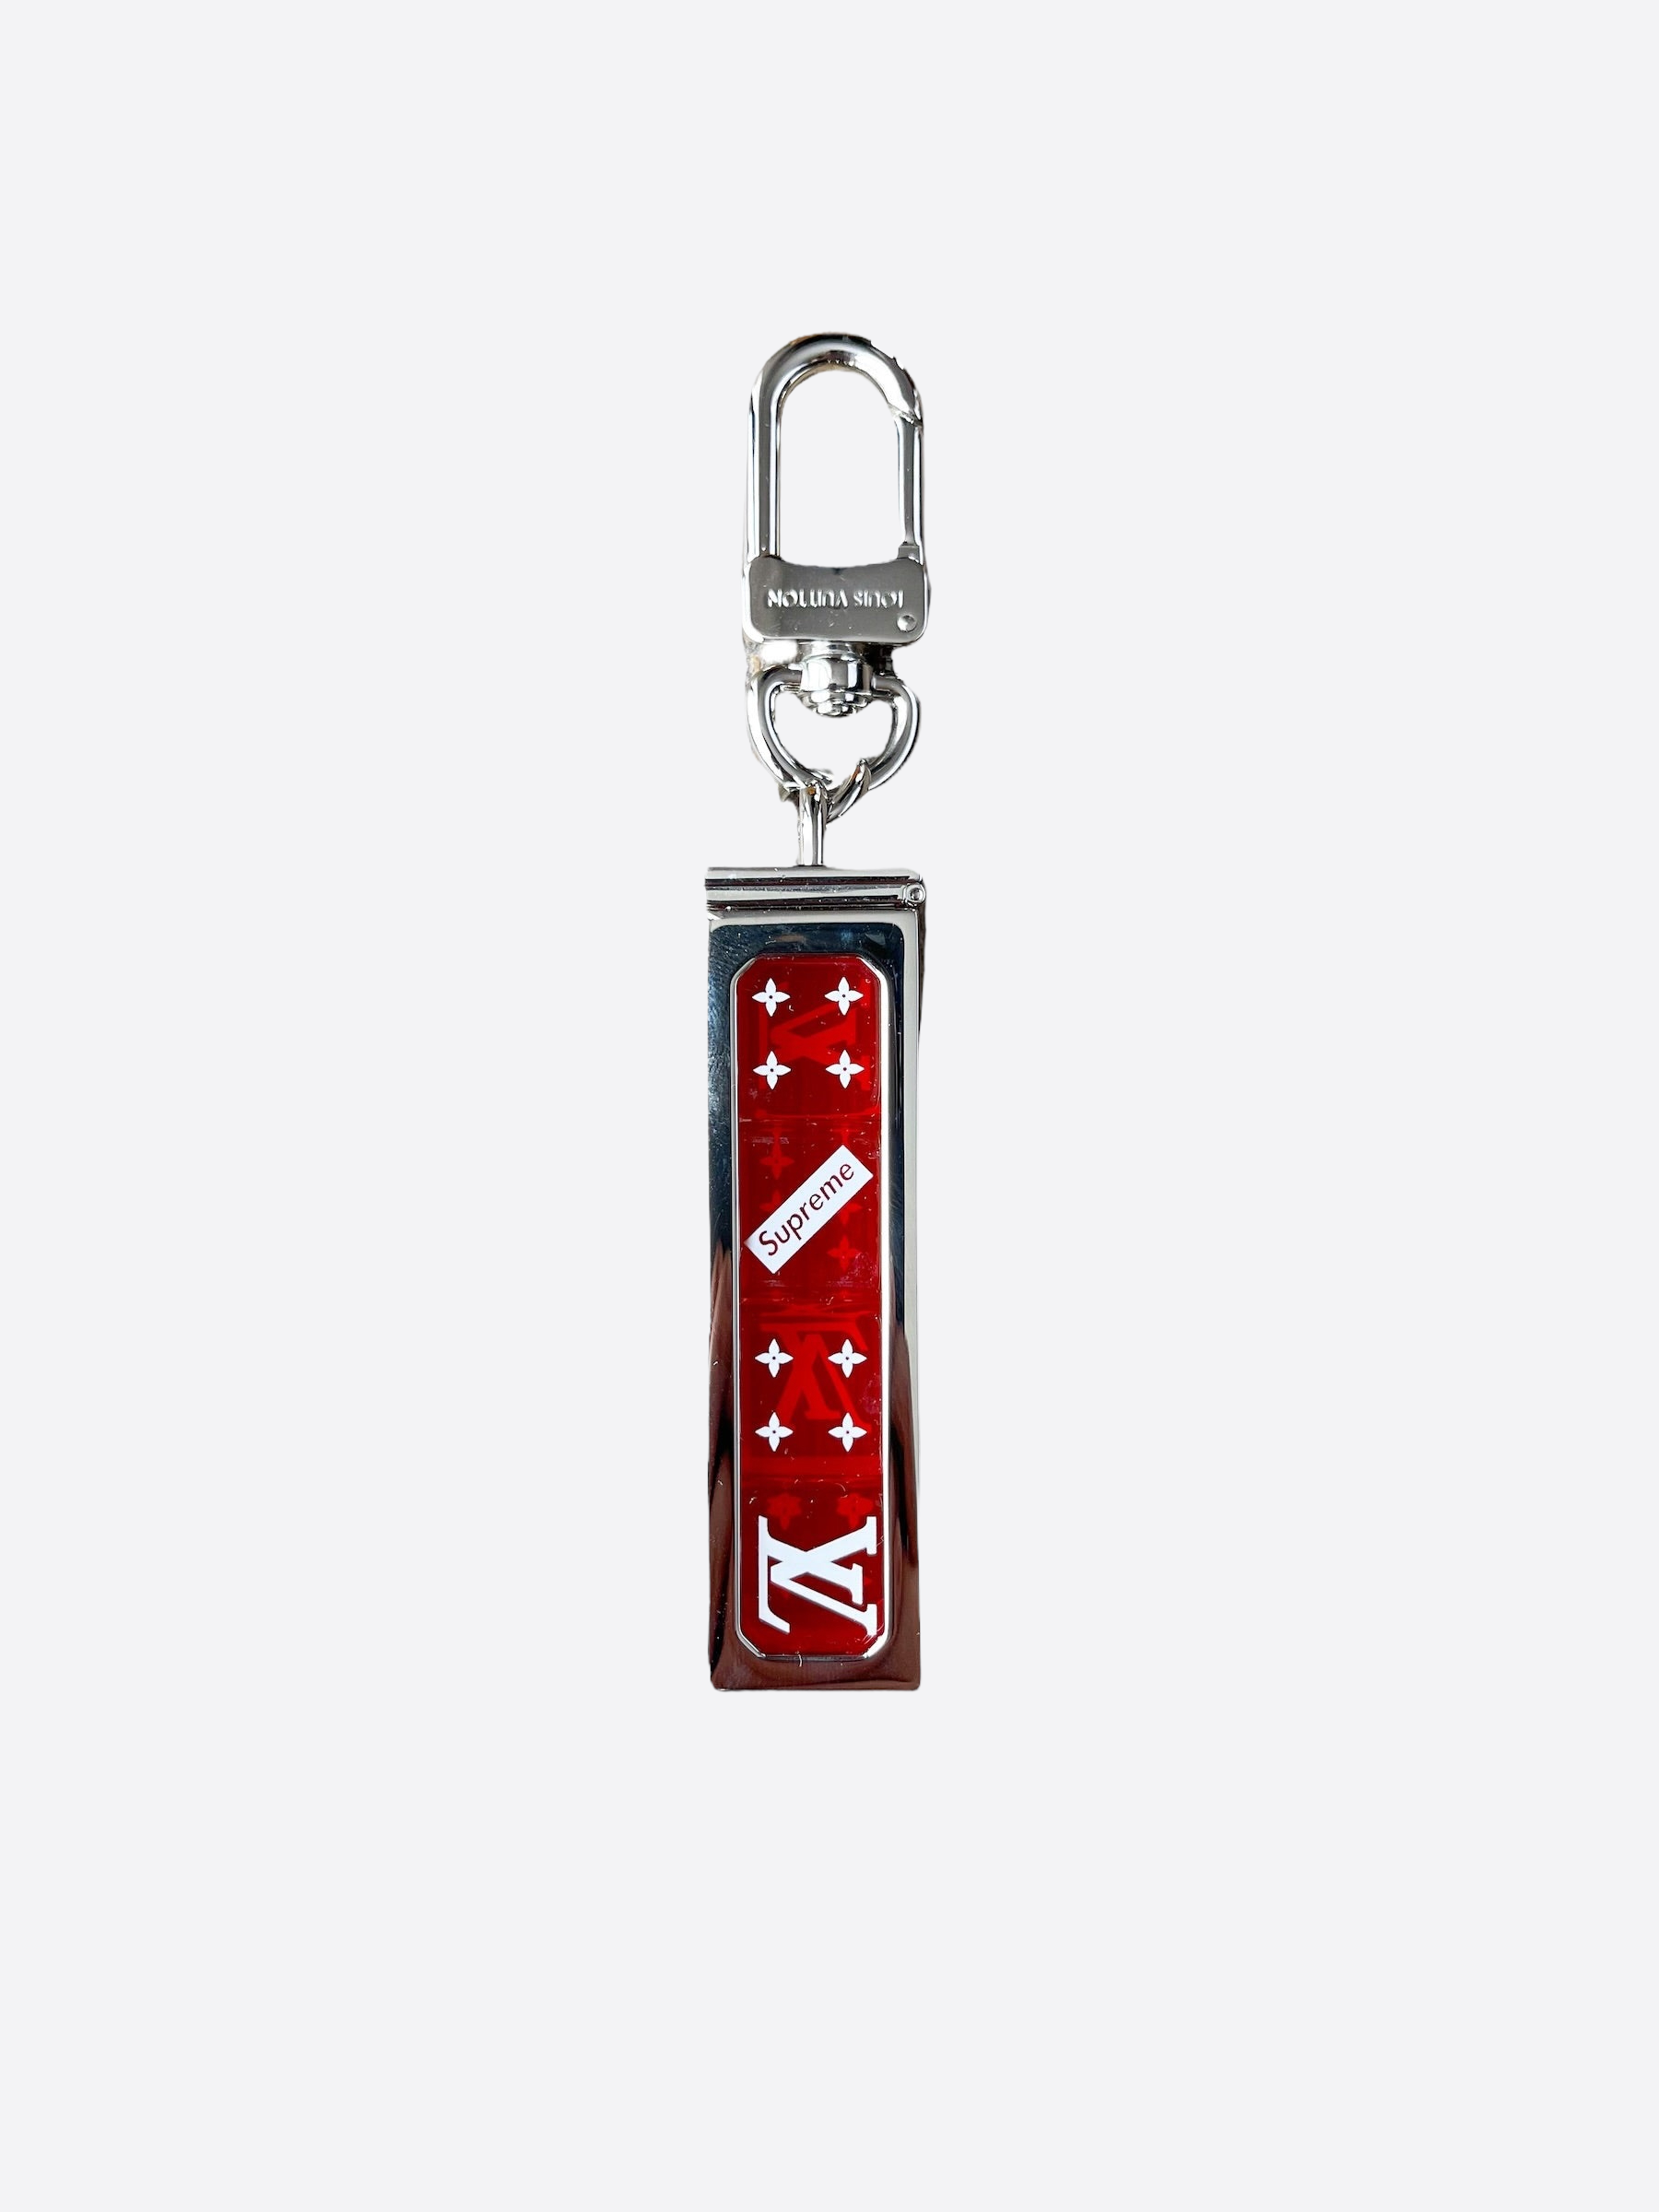 Supreme Louis Vuitton Keychain Dice Red Brand New Louie Brand